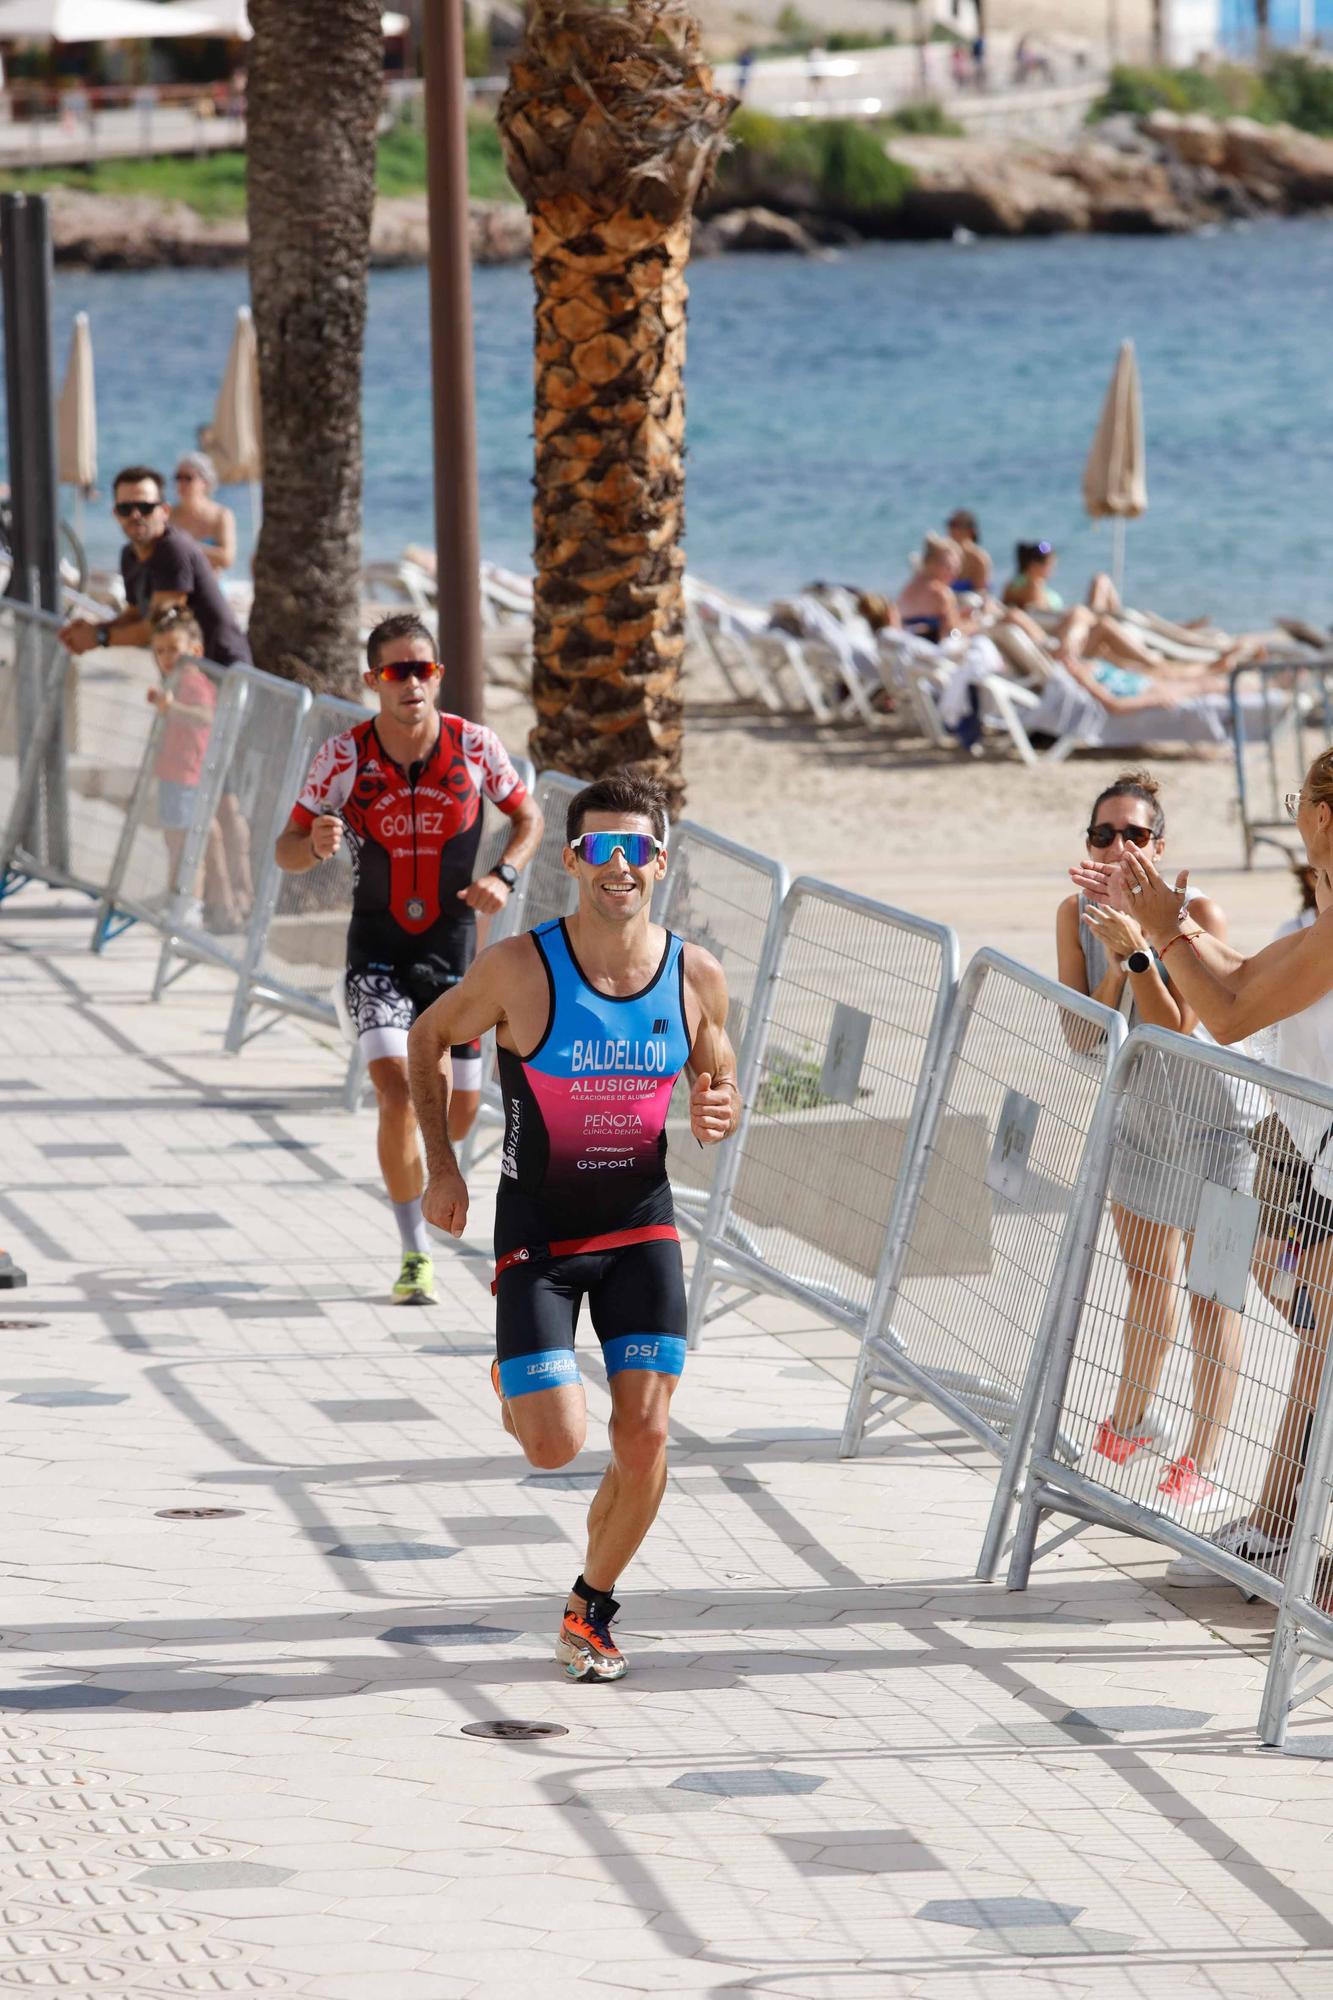 Ibiza Half Triathlon 2022